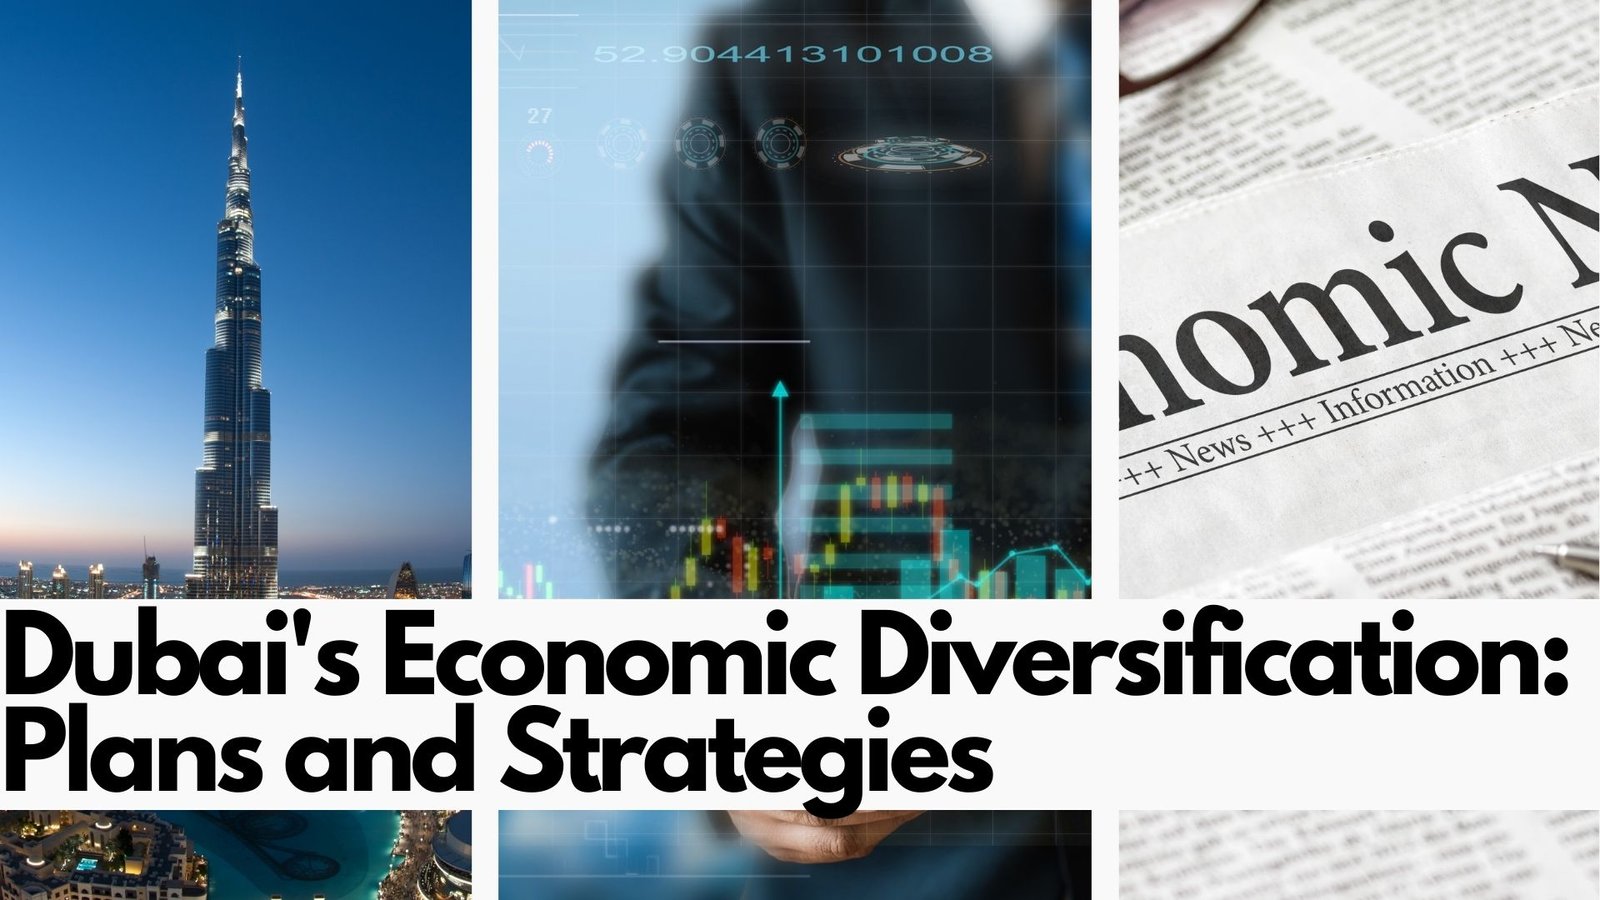 Dubai's Economic Diversification Plans and Strategies